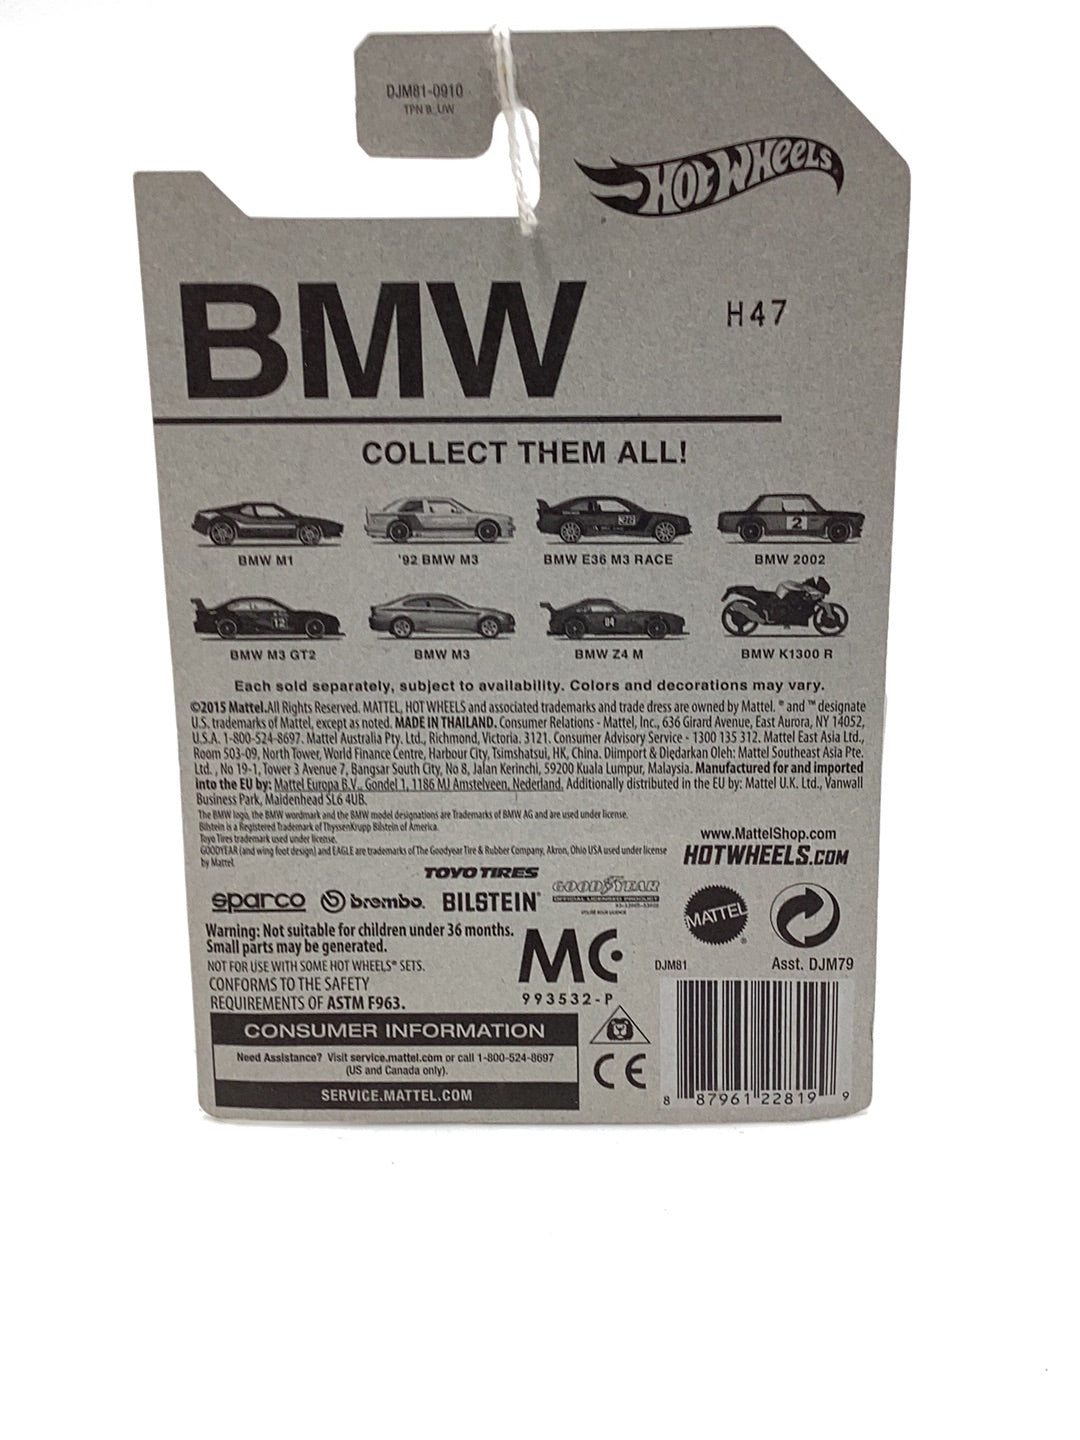 Hot wheels BMW series 92 BMW M3 Walmart exclusive 2/8 cracked blister